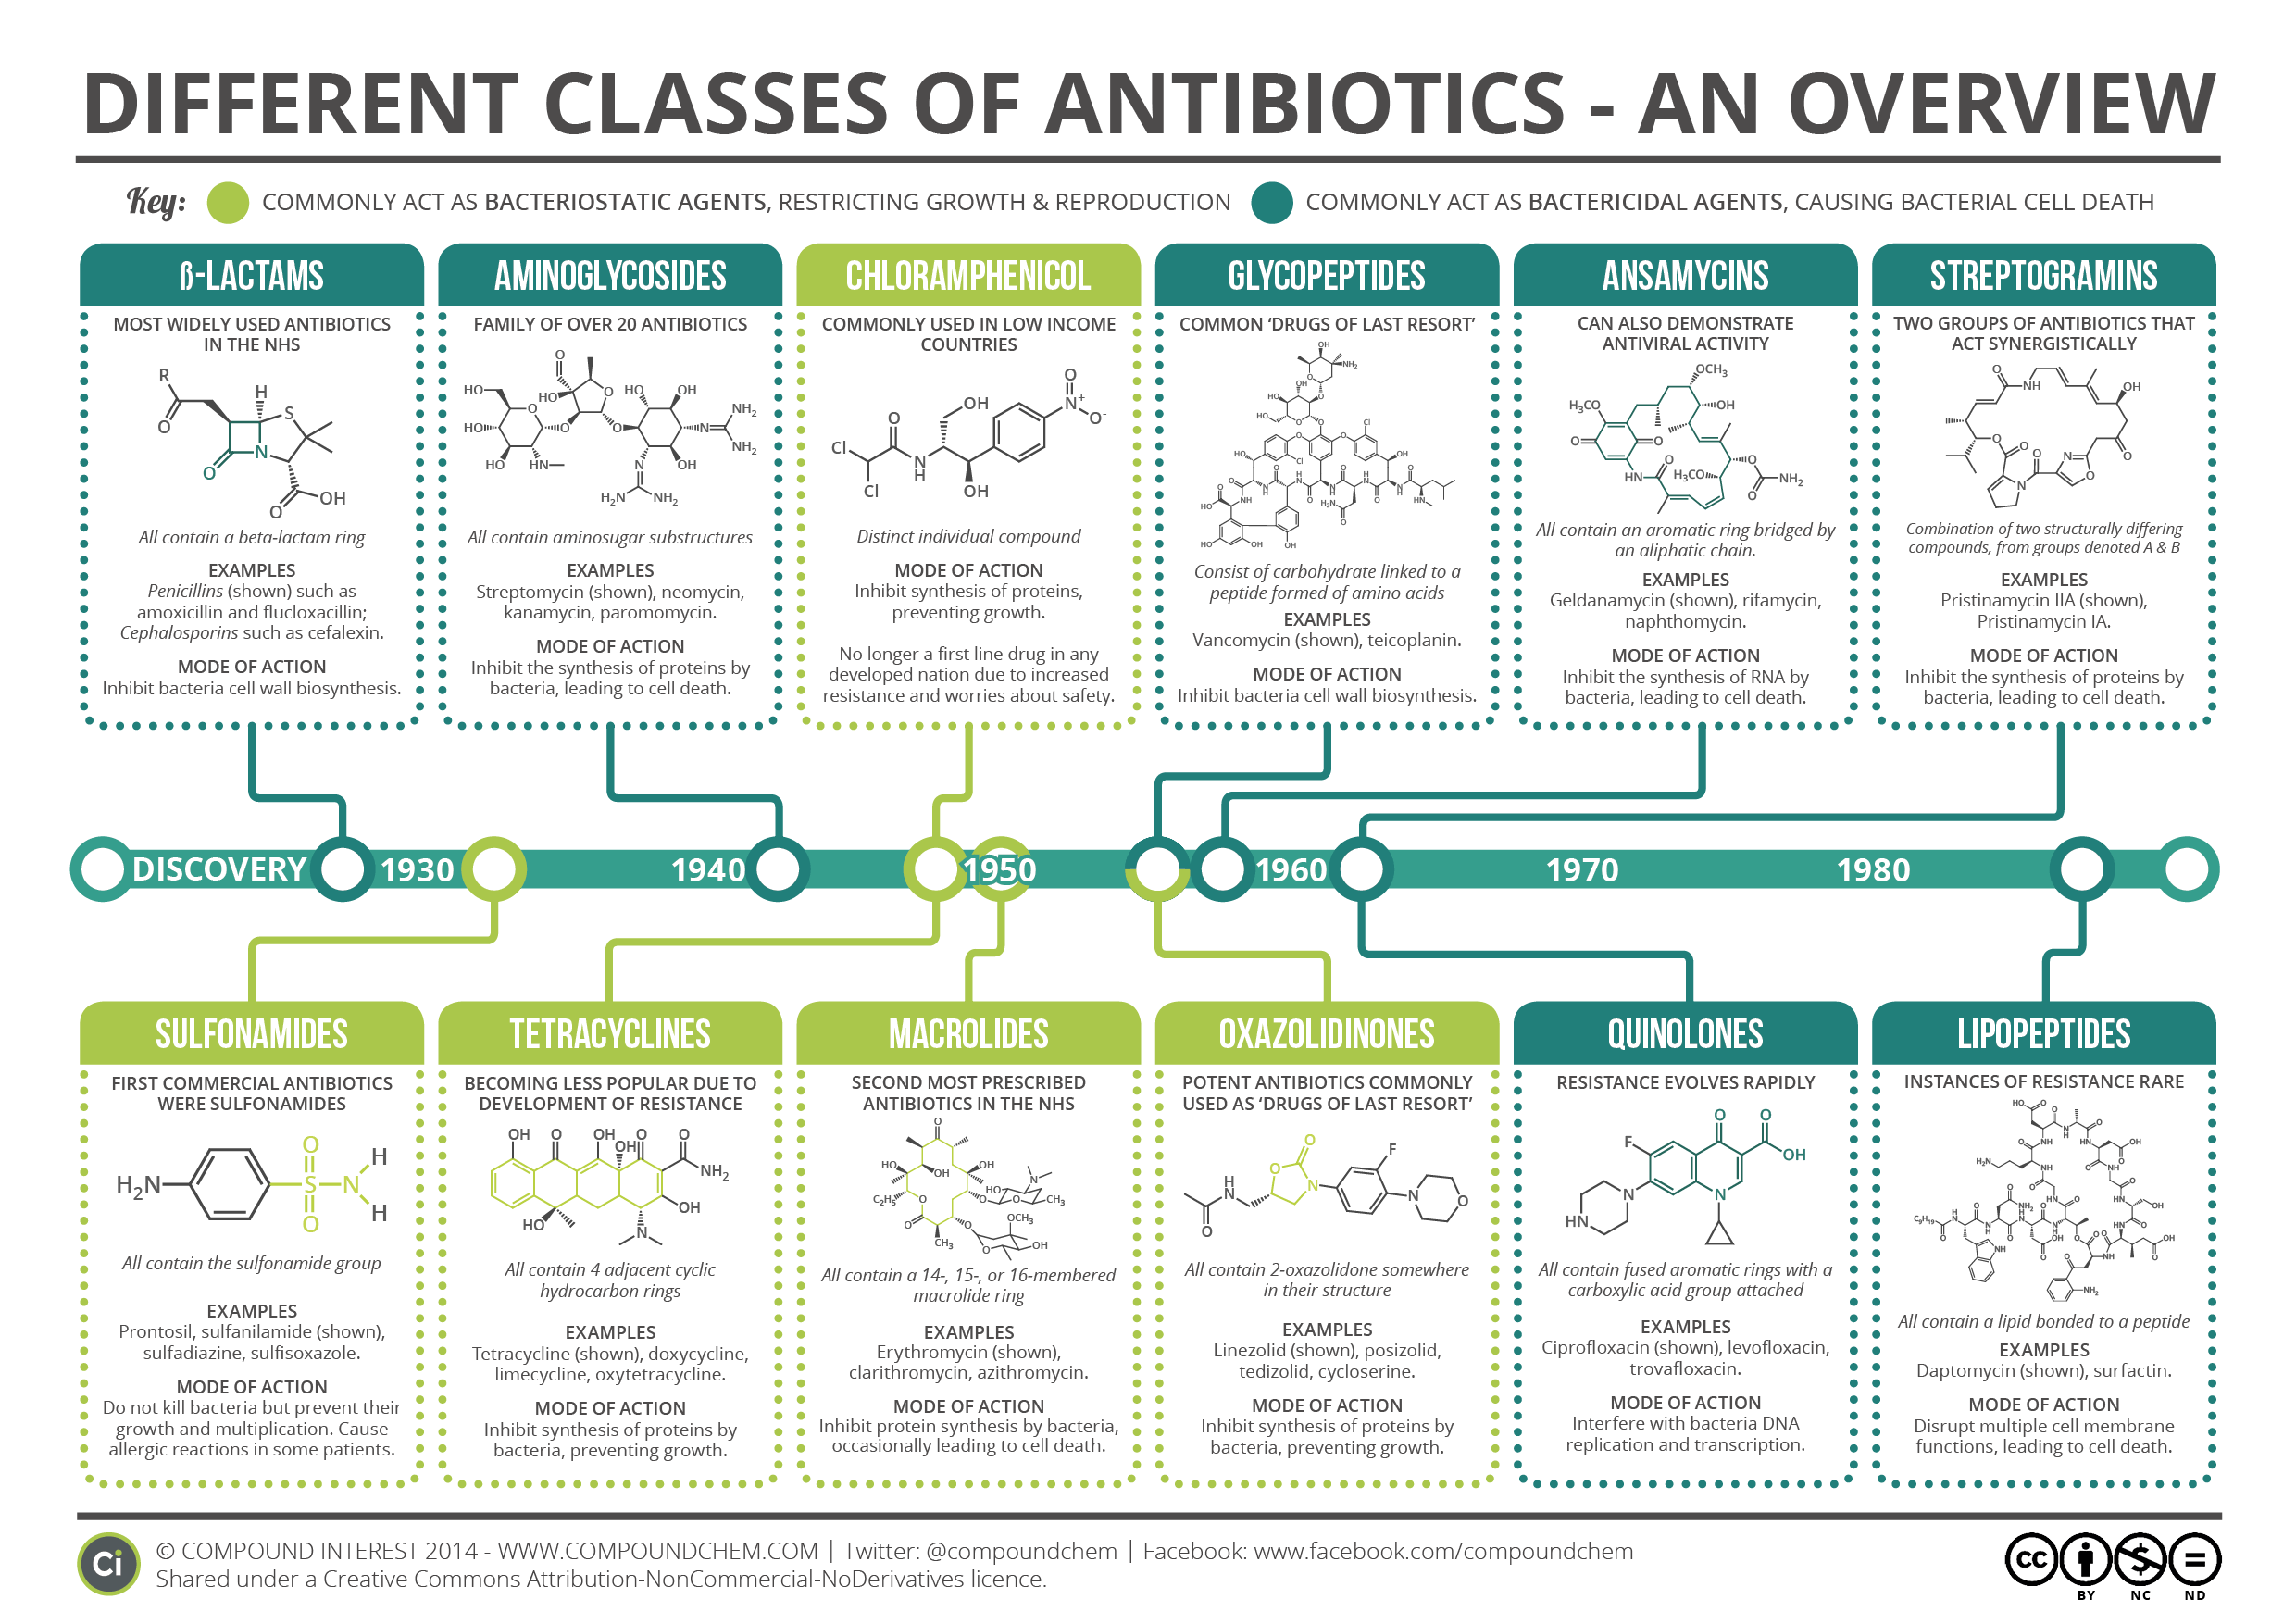 An Overview of Antibiotics